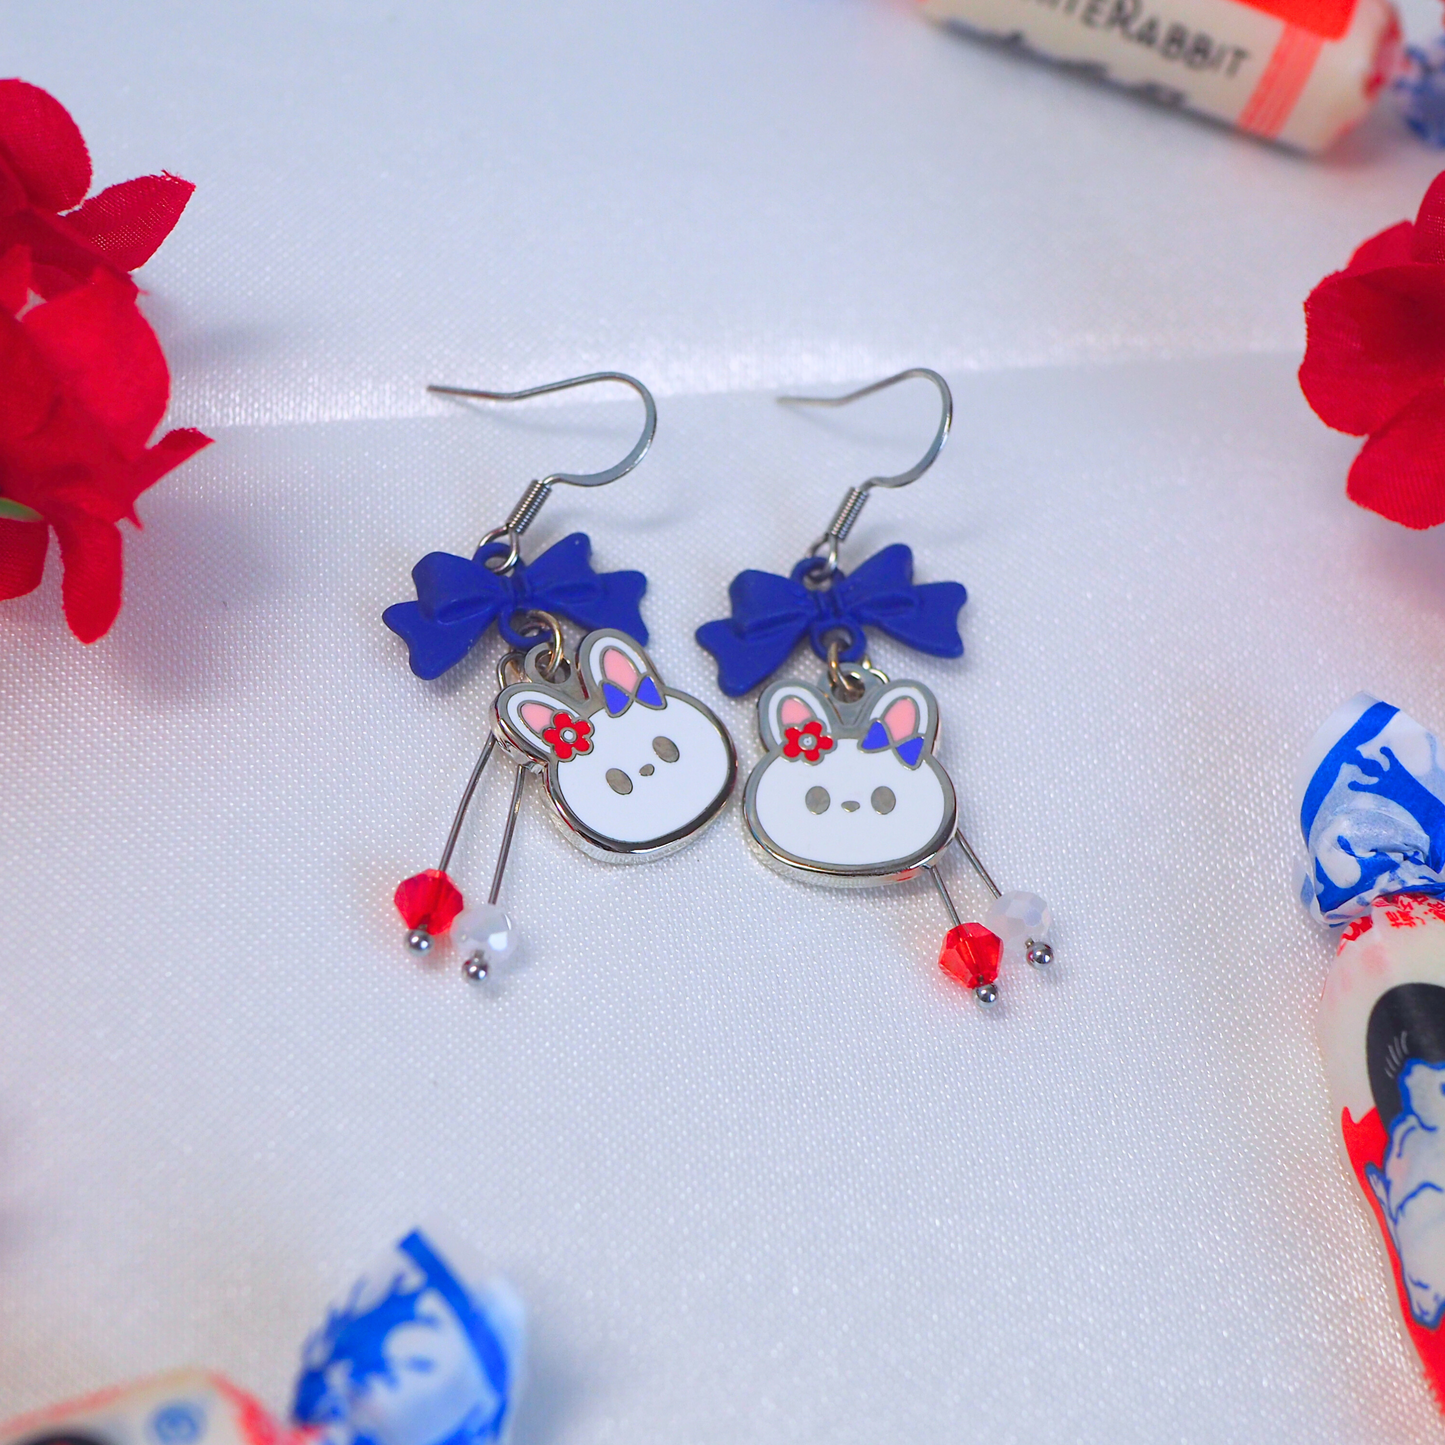 White Rabbit Candy Earrings